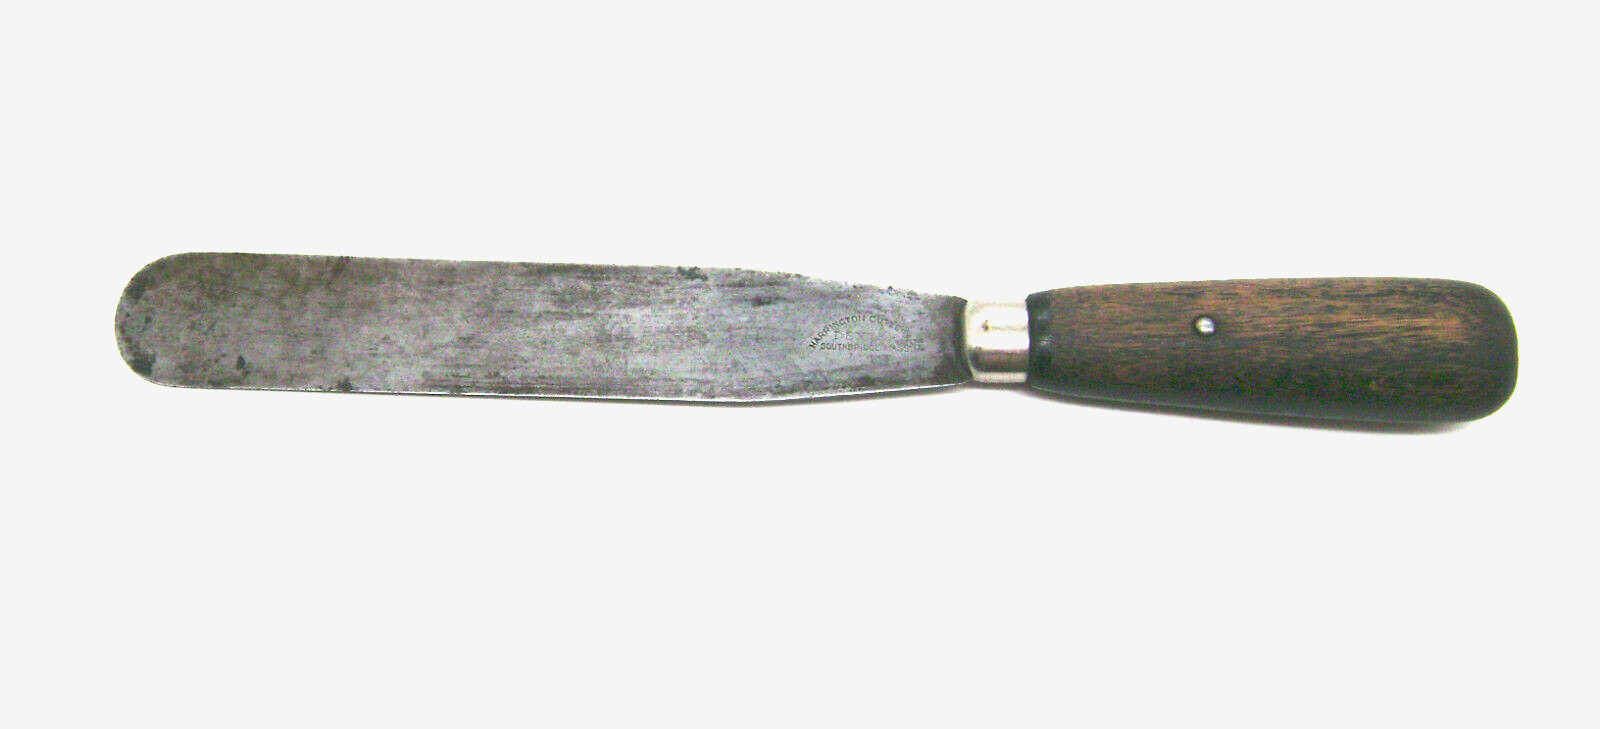 Antique ca. 1900 Harrington Cutlery Co. Dexter Spreader Knife